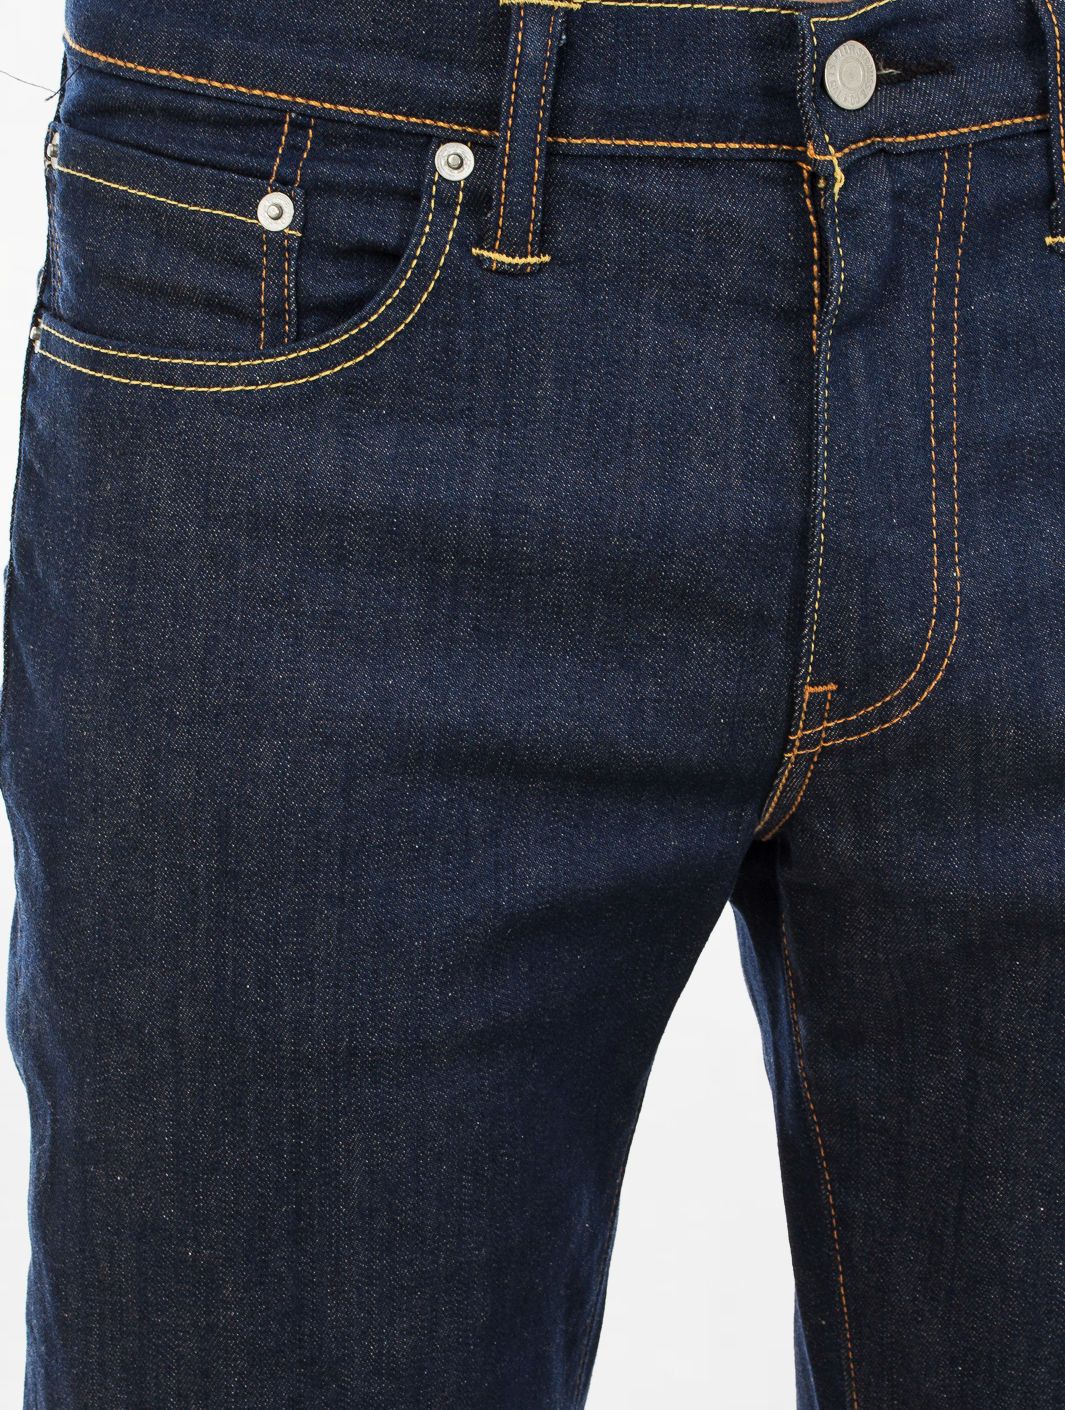 Levi's 511 Jeans Size US 29 - 1 Preview